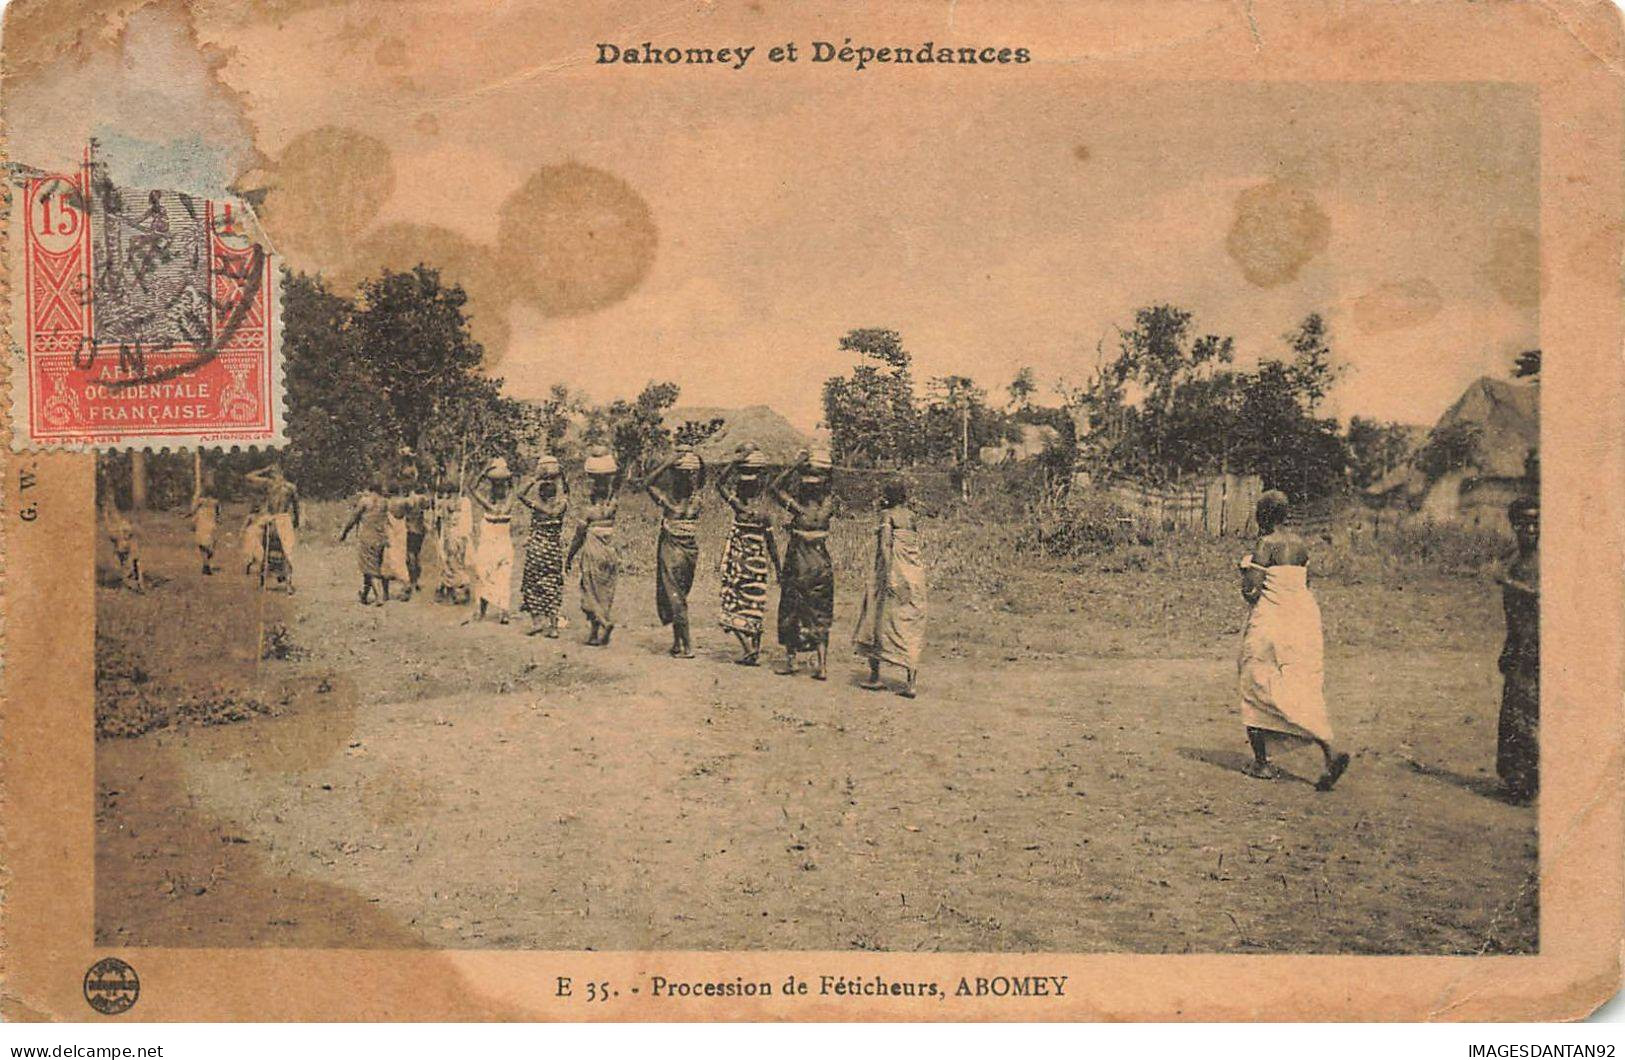 DAHOMEY #27756 PROCESSION DE FETICHEURS AHOMEY - Dahomey